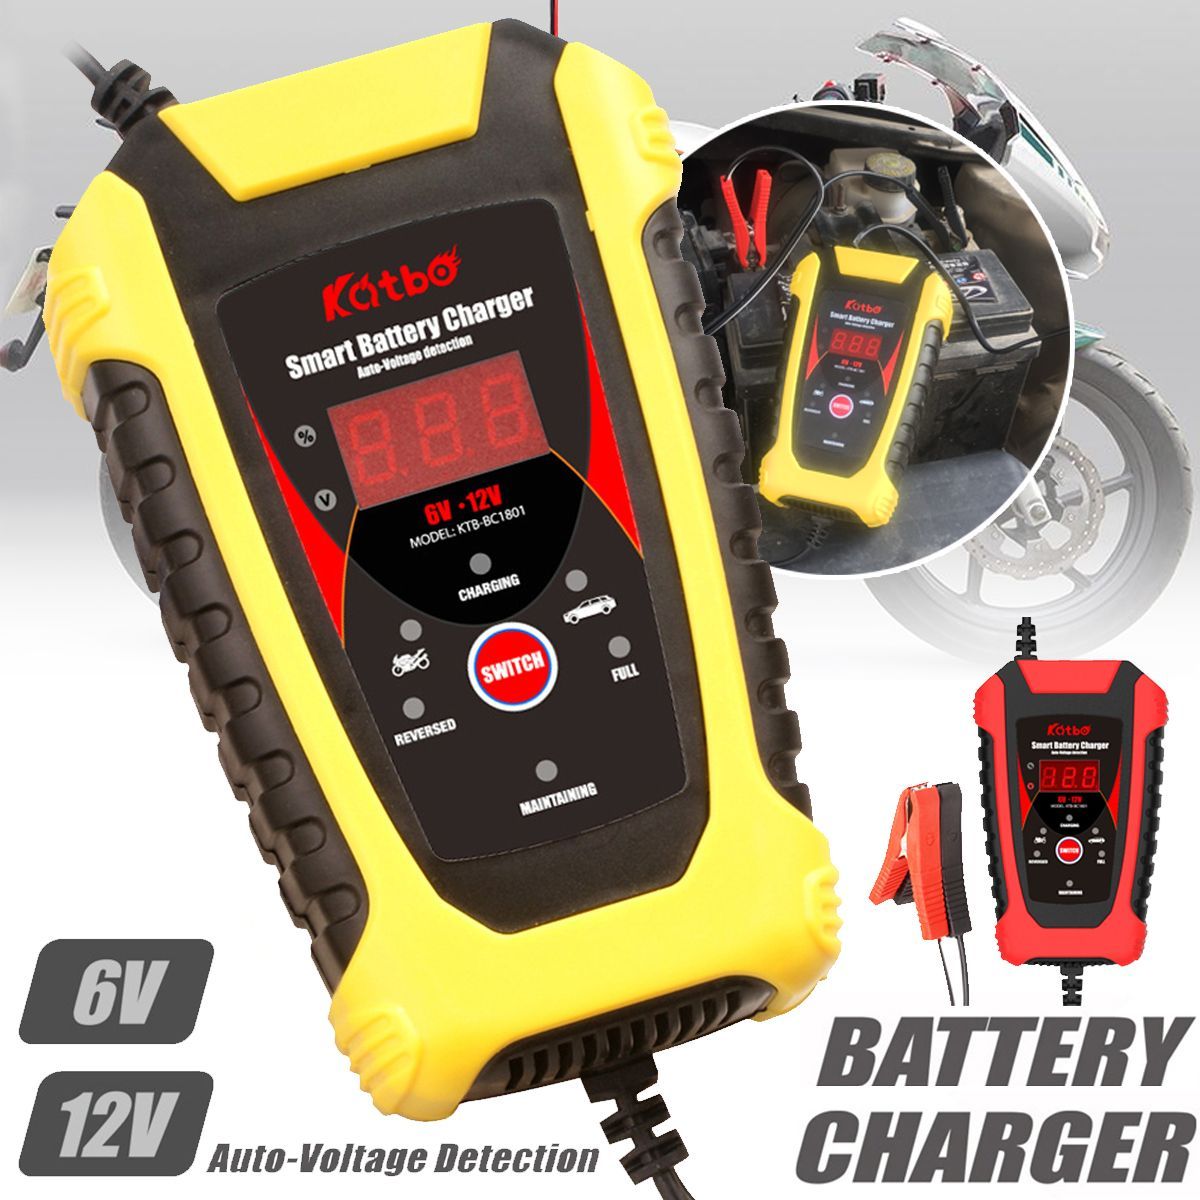 6V-12V-Universal-Car-Motorcycle-Battery-Charger-Tester-Load-Analyzer-Multifunctional-Intelligent-Led-1749422